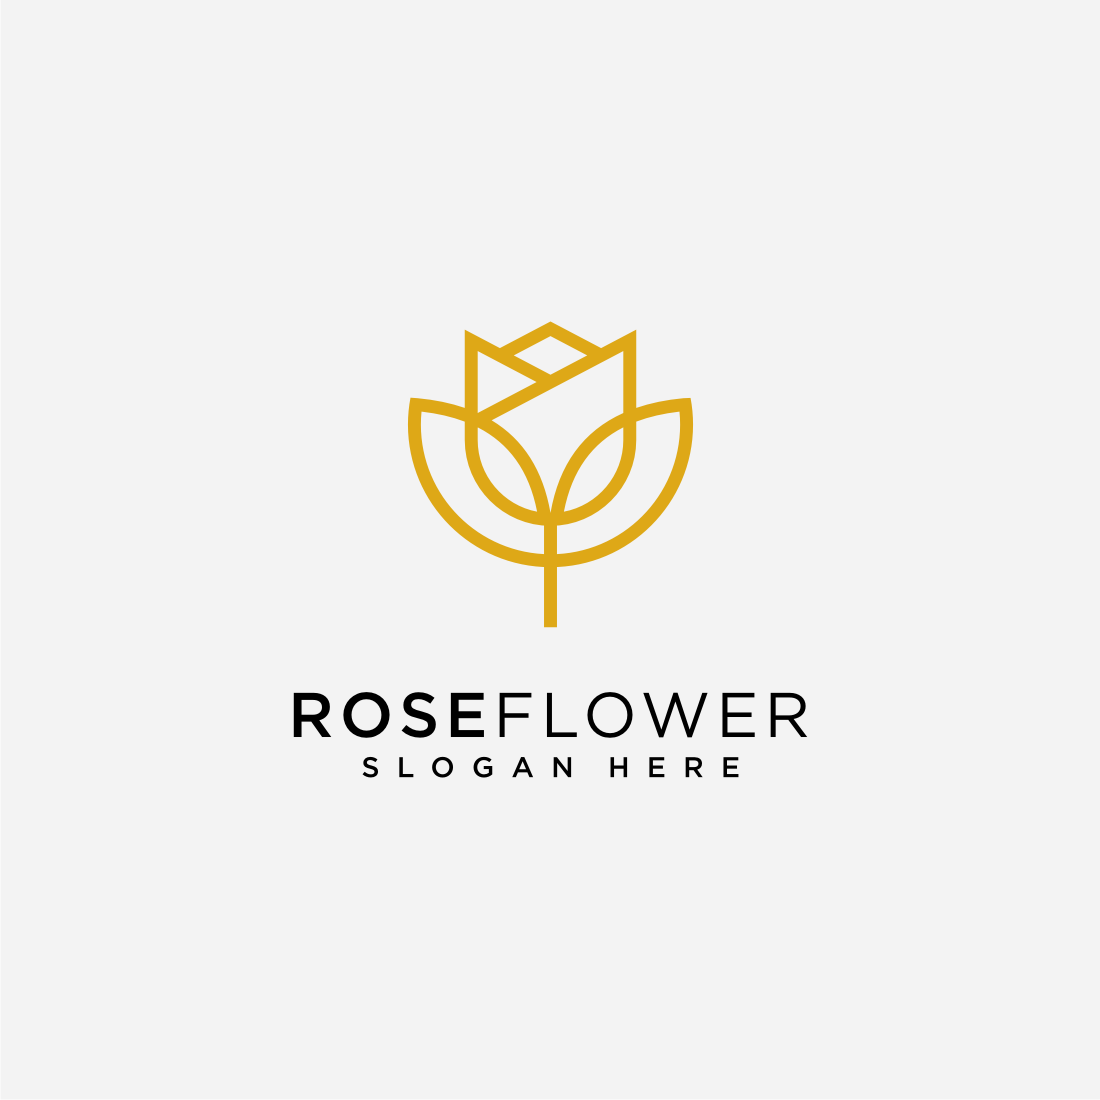 Logo for a flower shop.